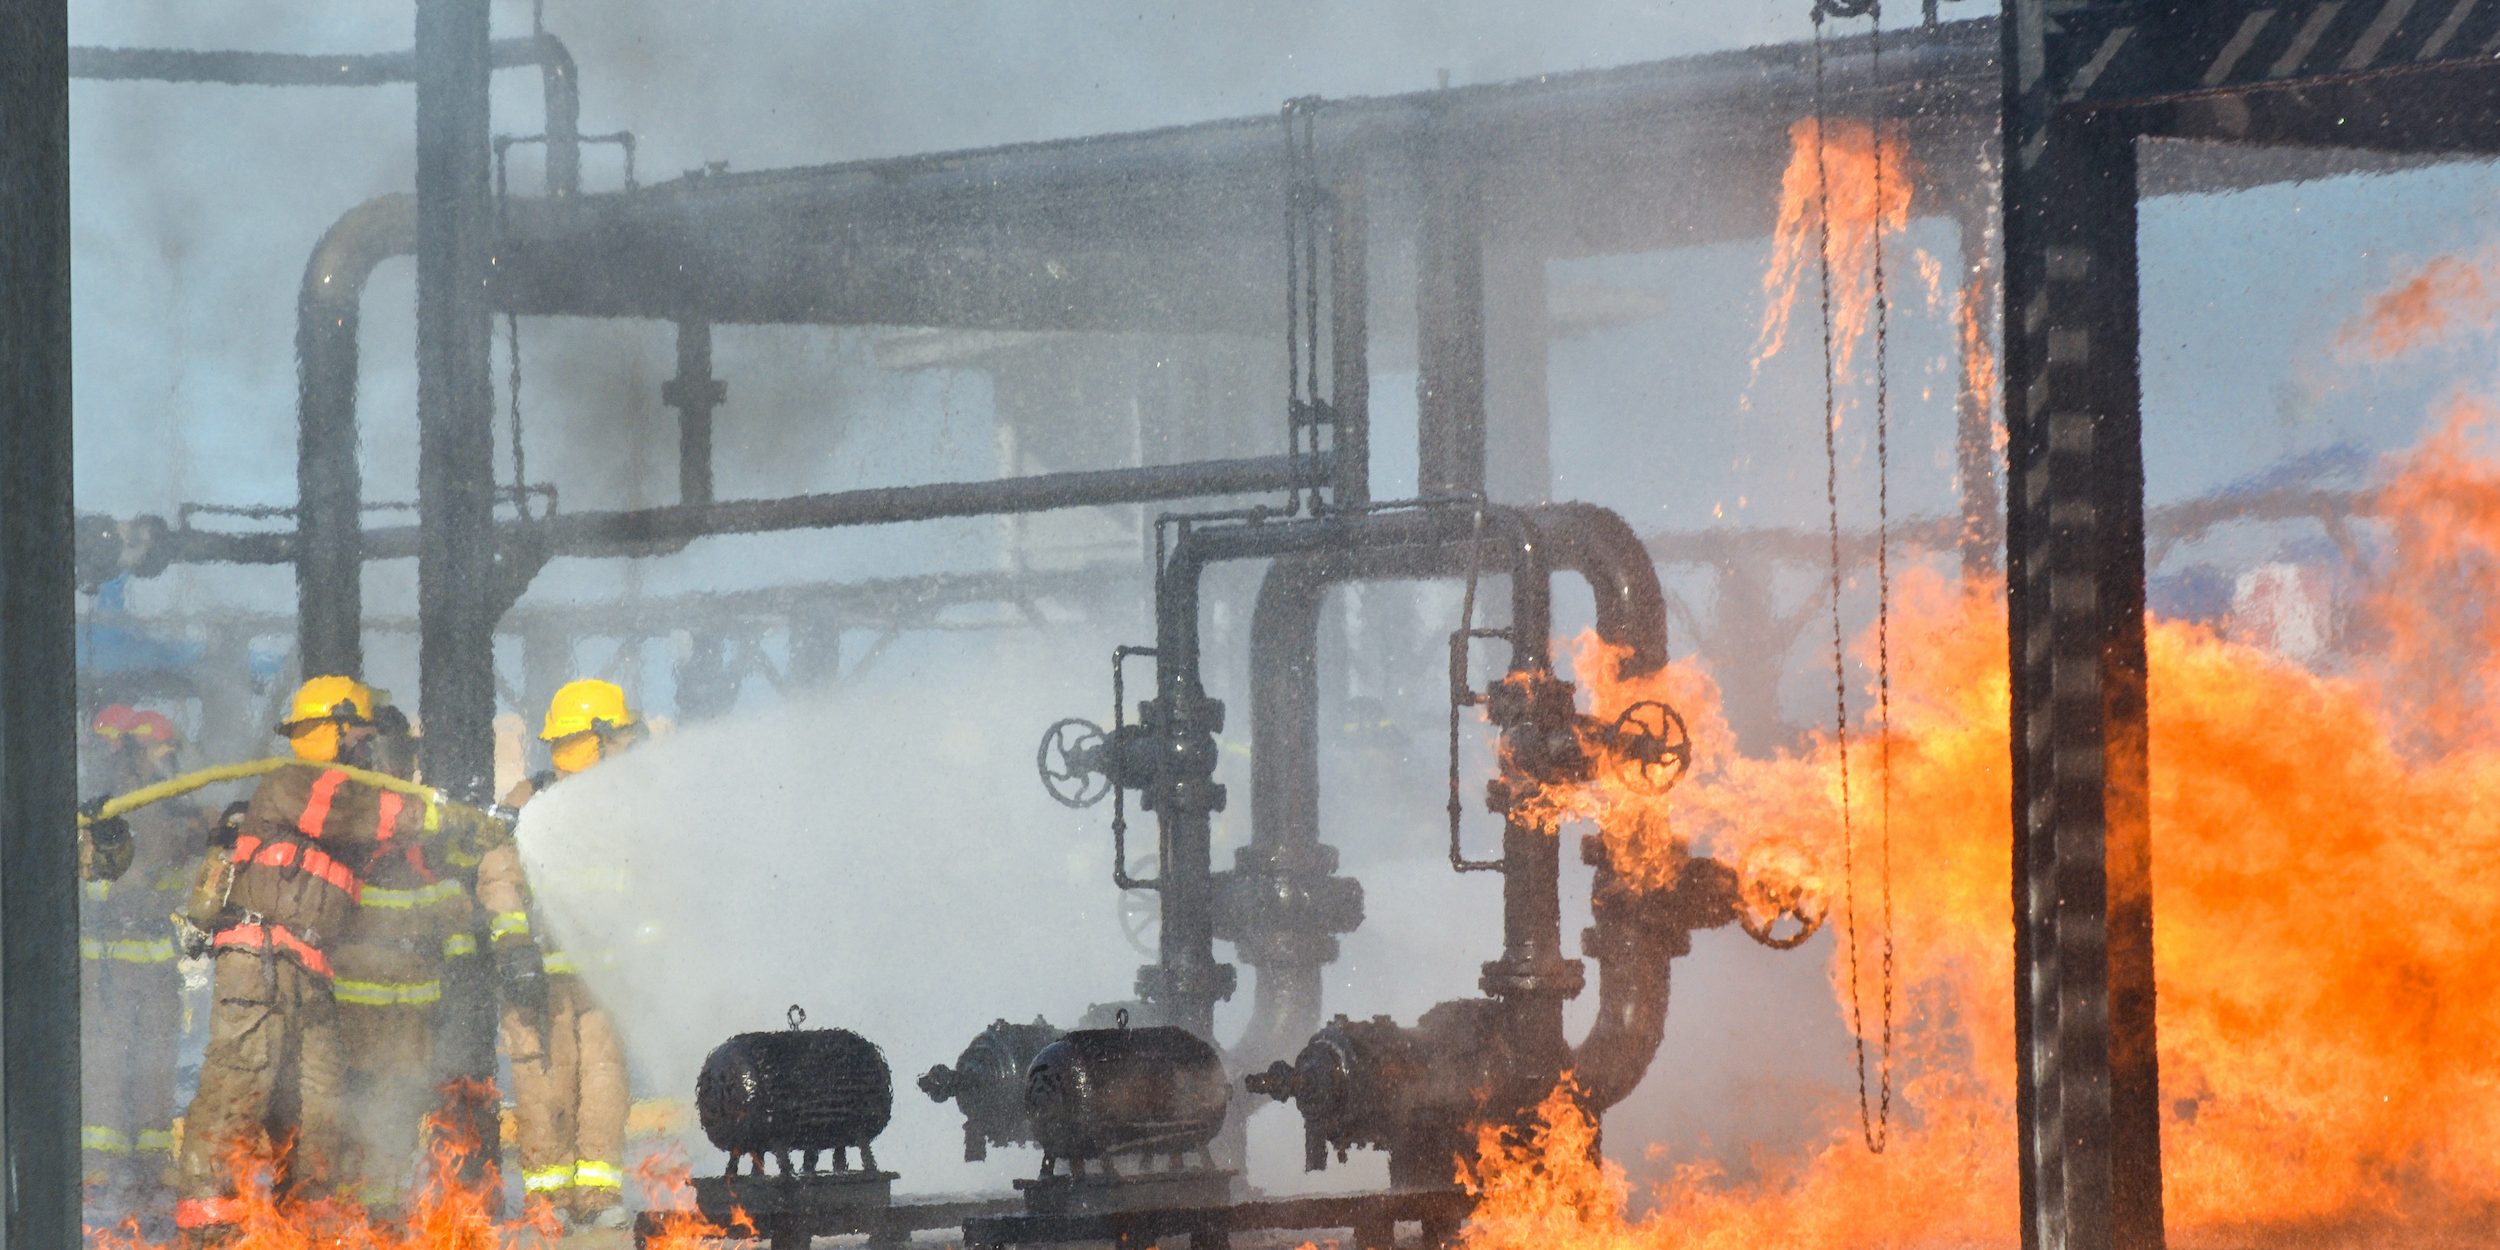 Fire fighters battling a blaze at oil pipeline refinery